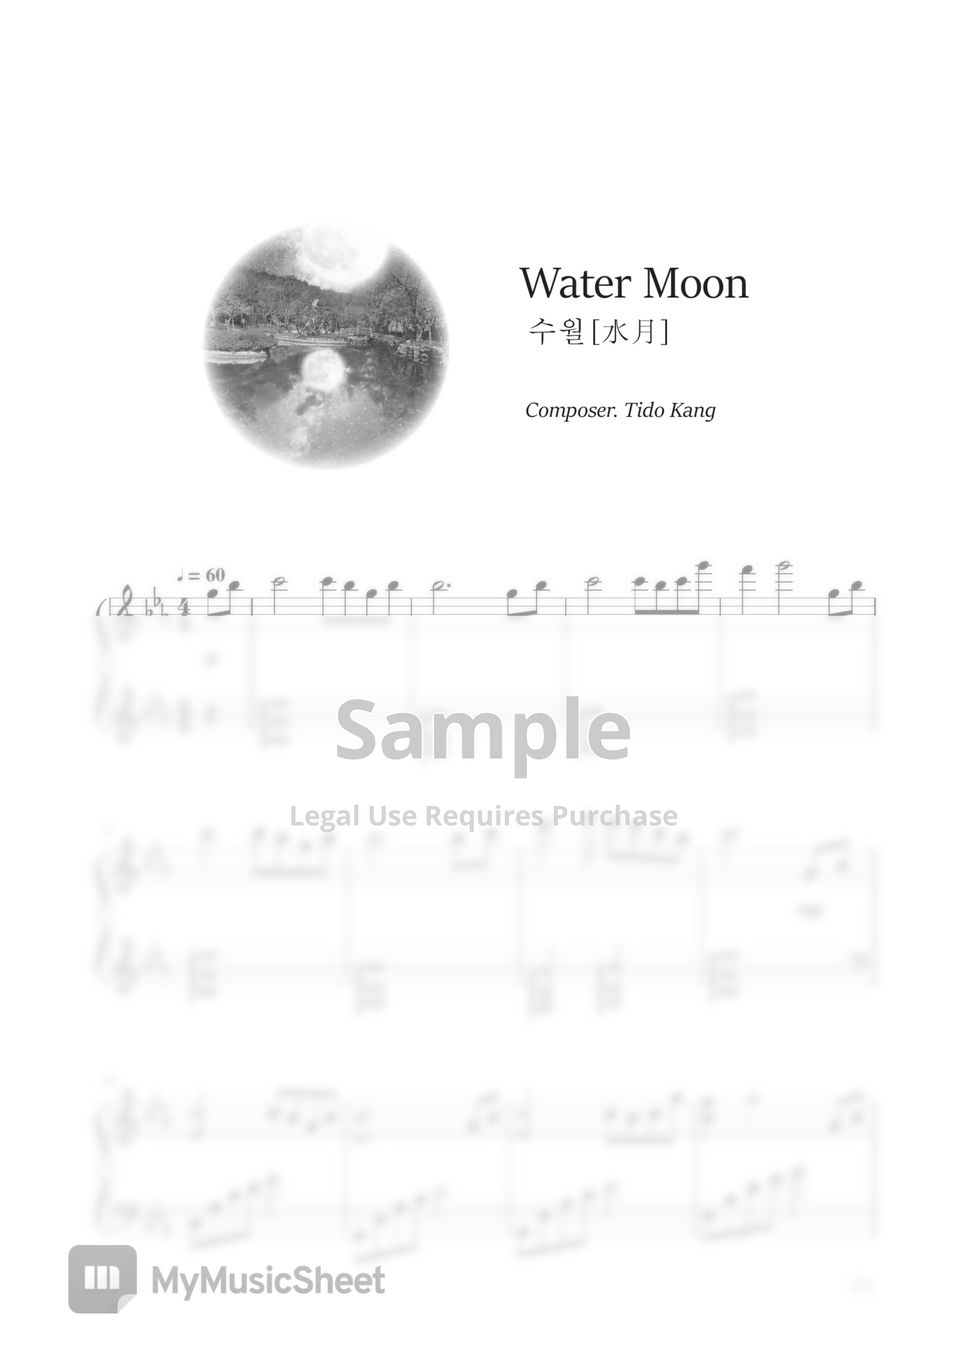 Tido Kang - Water Moon